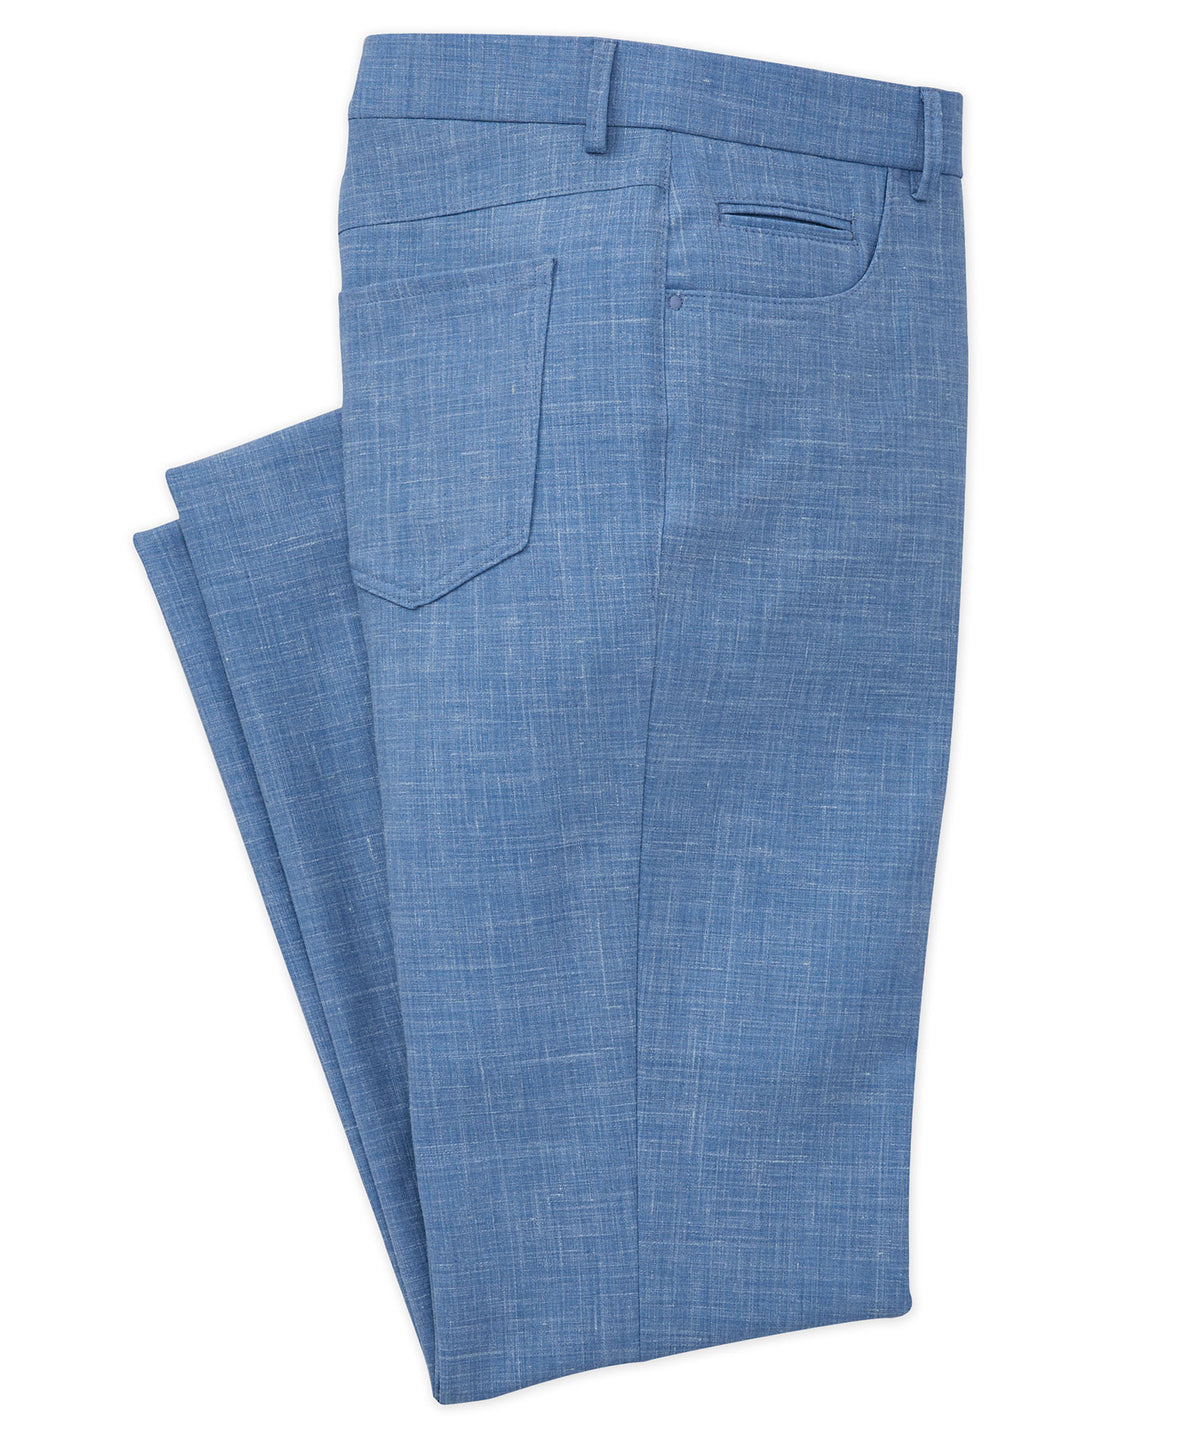 Westport Black Micro Donegal Stretch Five Pocket Linen Pant, Big & Tall